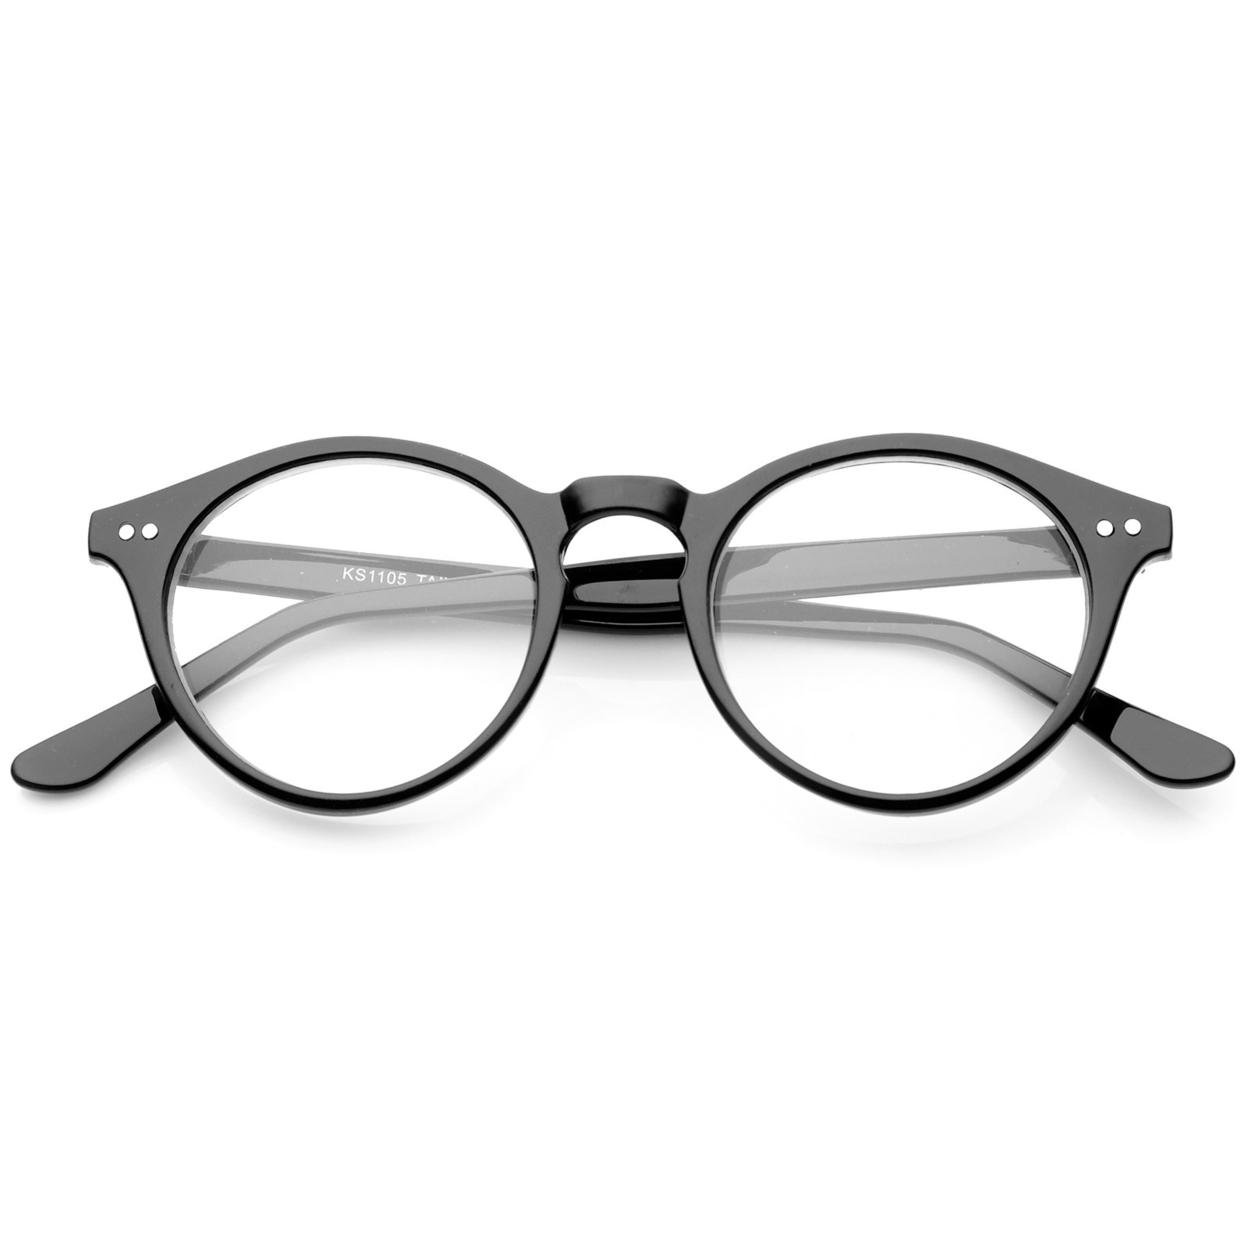 Retro Keyhole Nose Bridge Clear Lens P3 Round Glasses 46mm - Matte Yellow-Tortoise / Clear